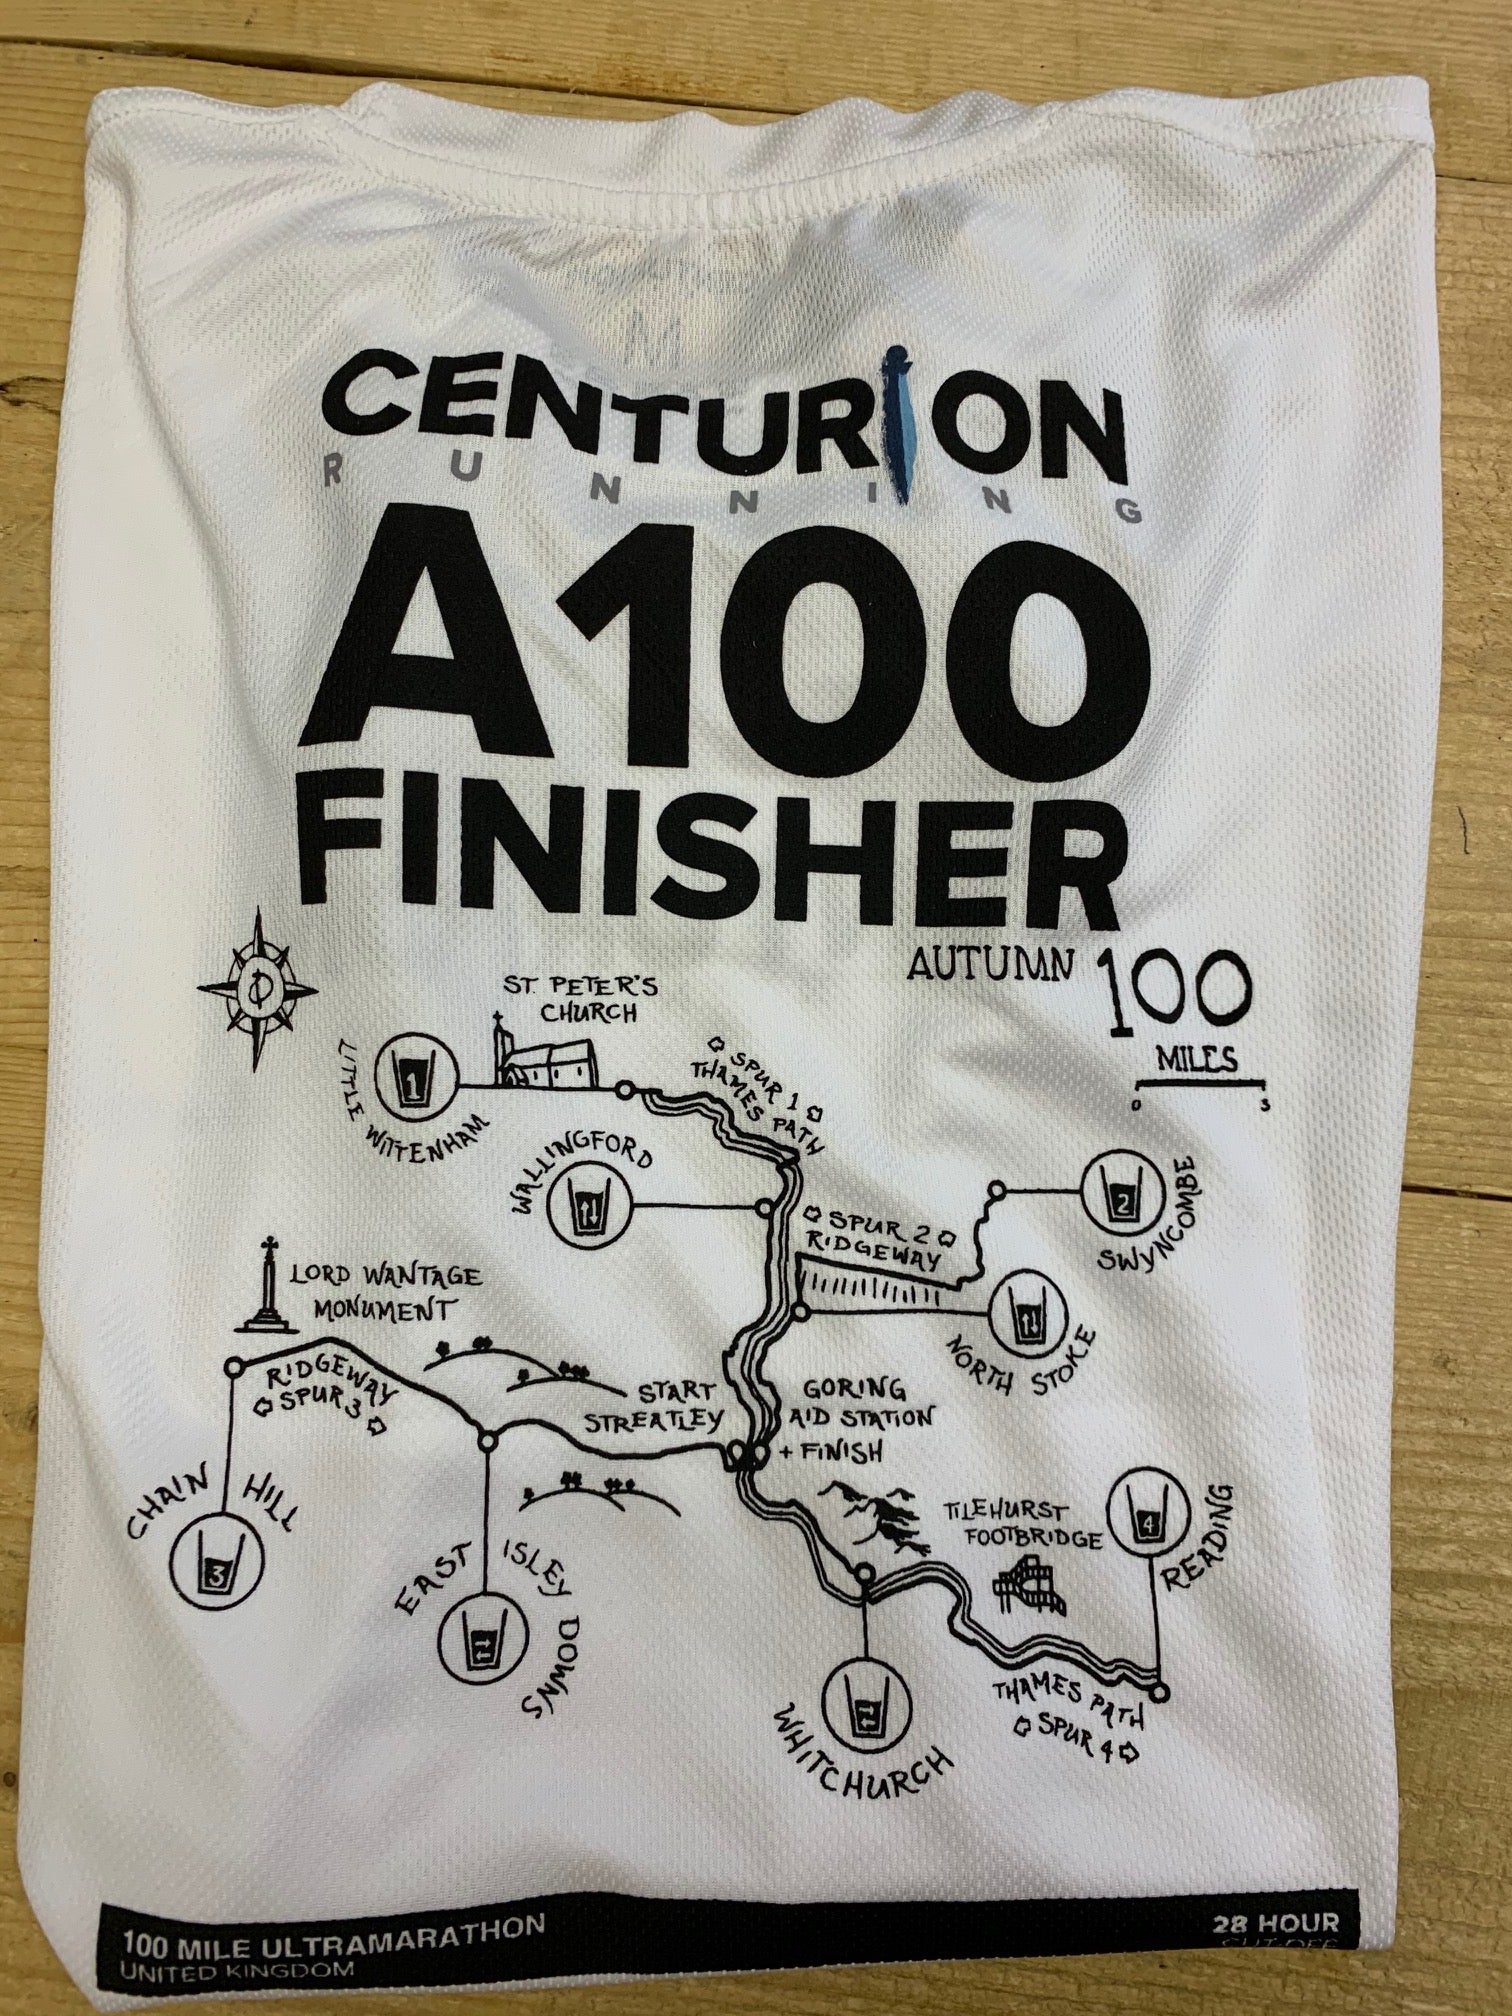 Centurion Running A100 Finisher Tee